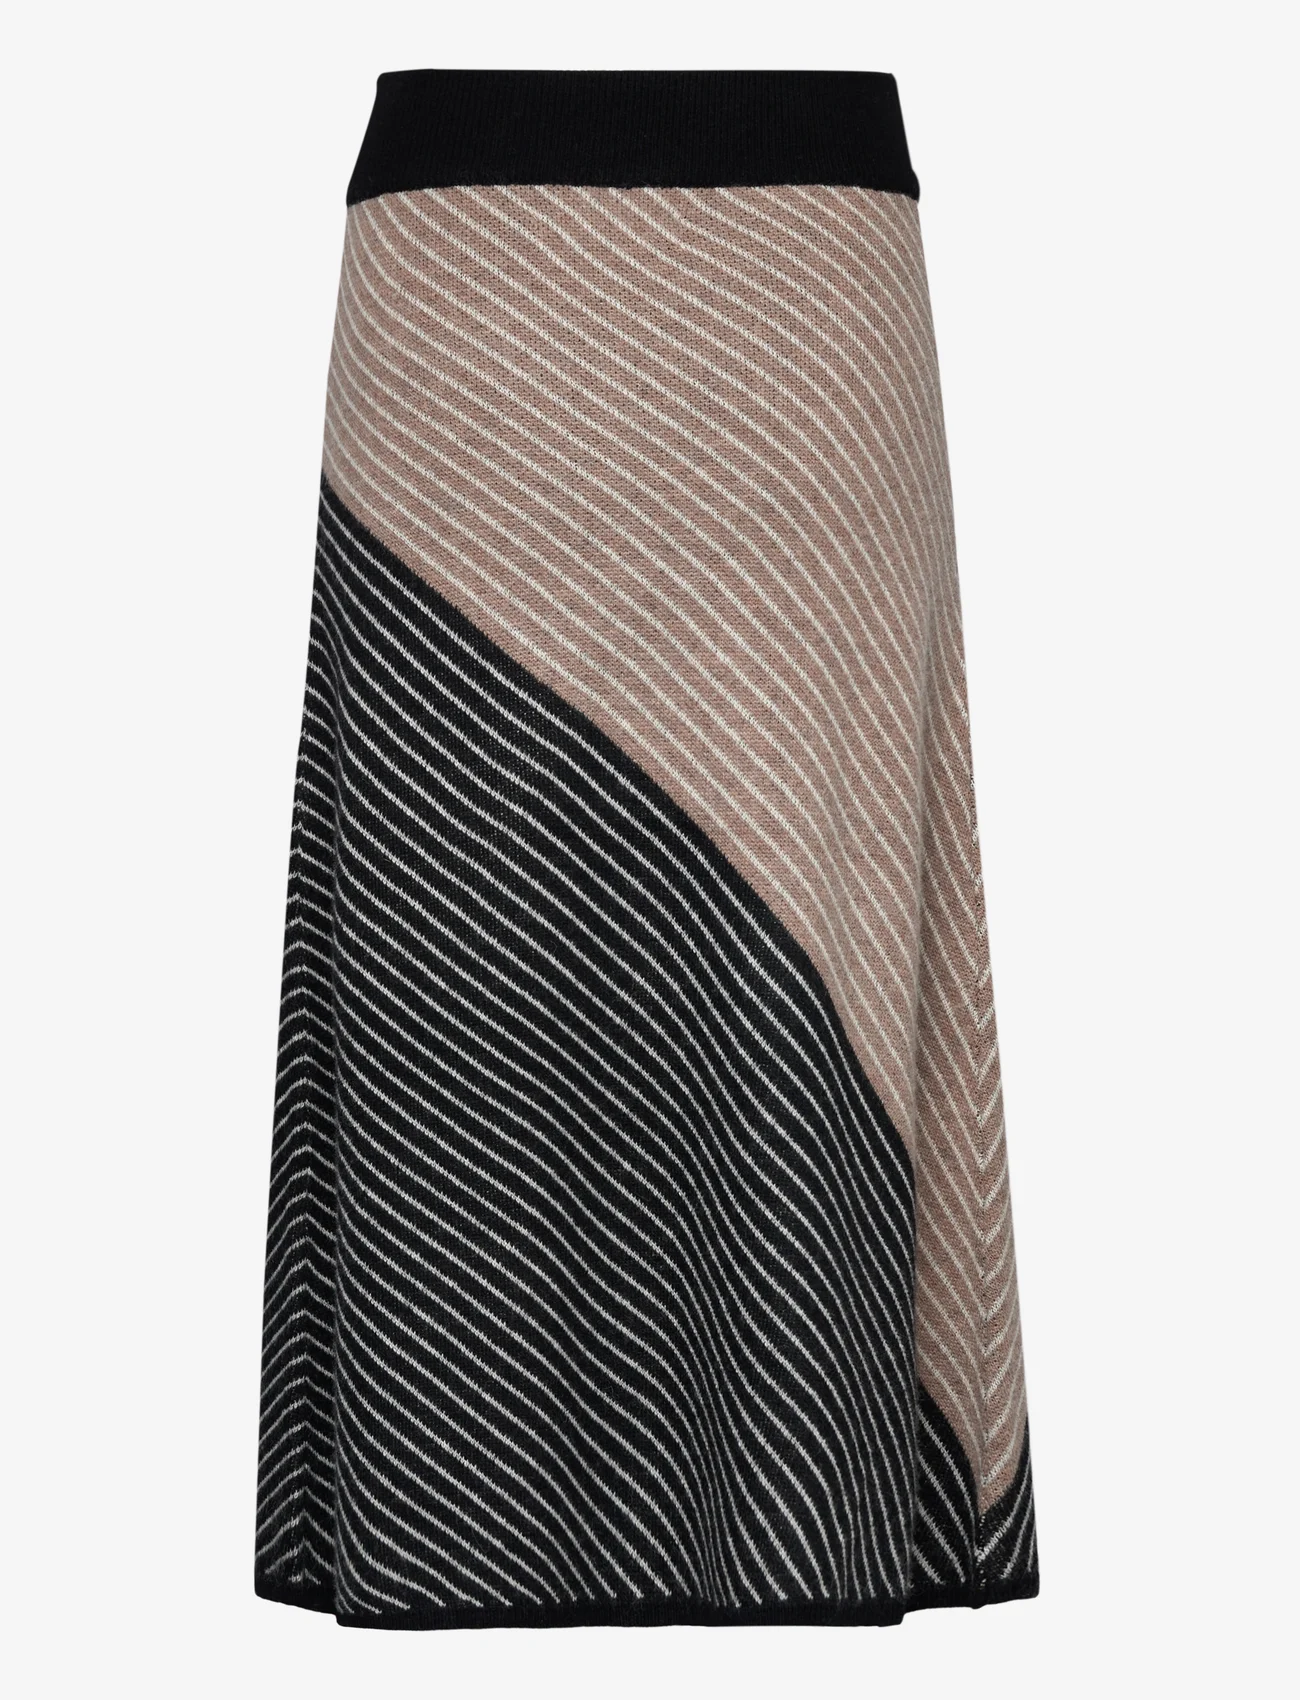 InWear - RancelIW Skirt - knitted skirts - mocha grey/black - 1